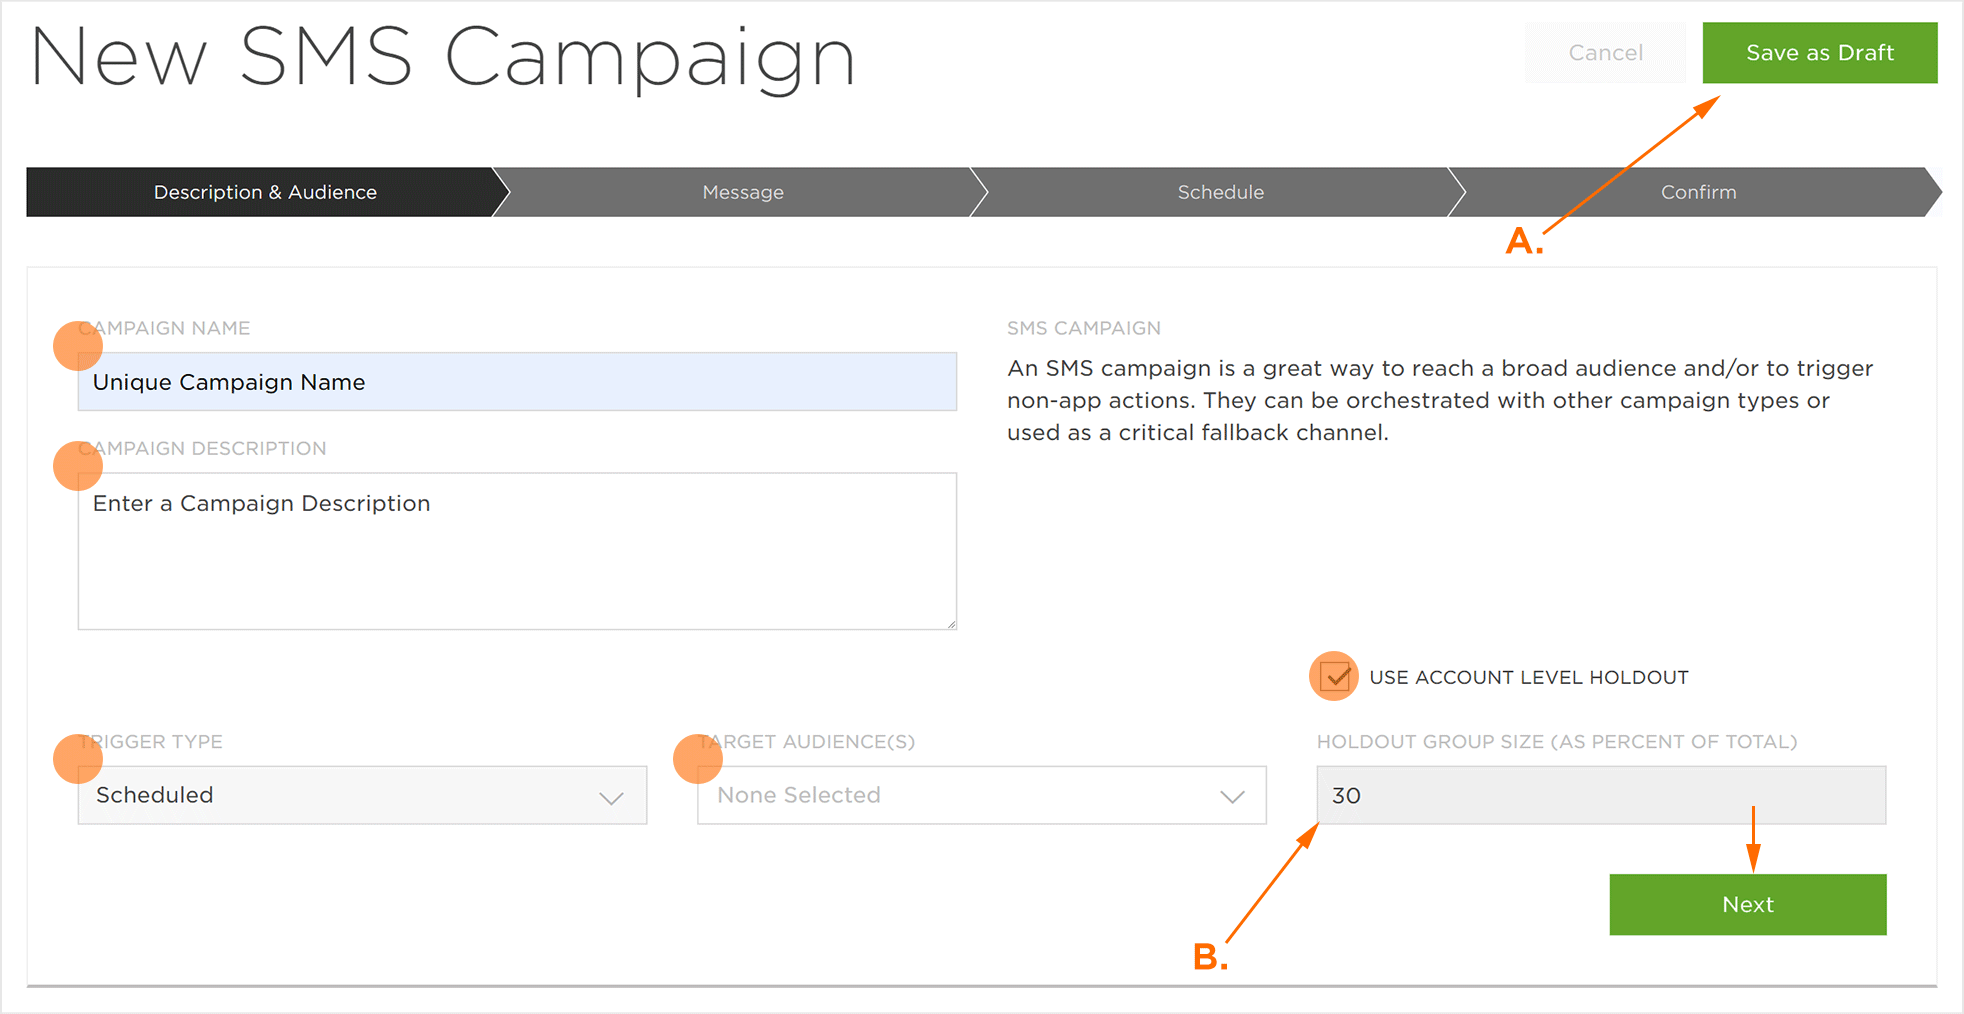 Campaign Description